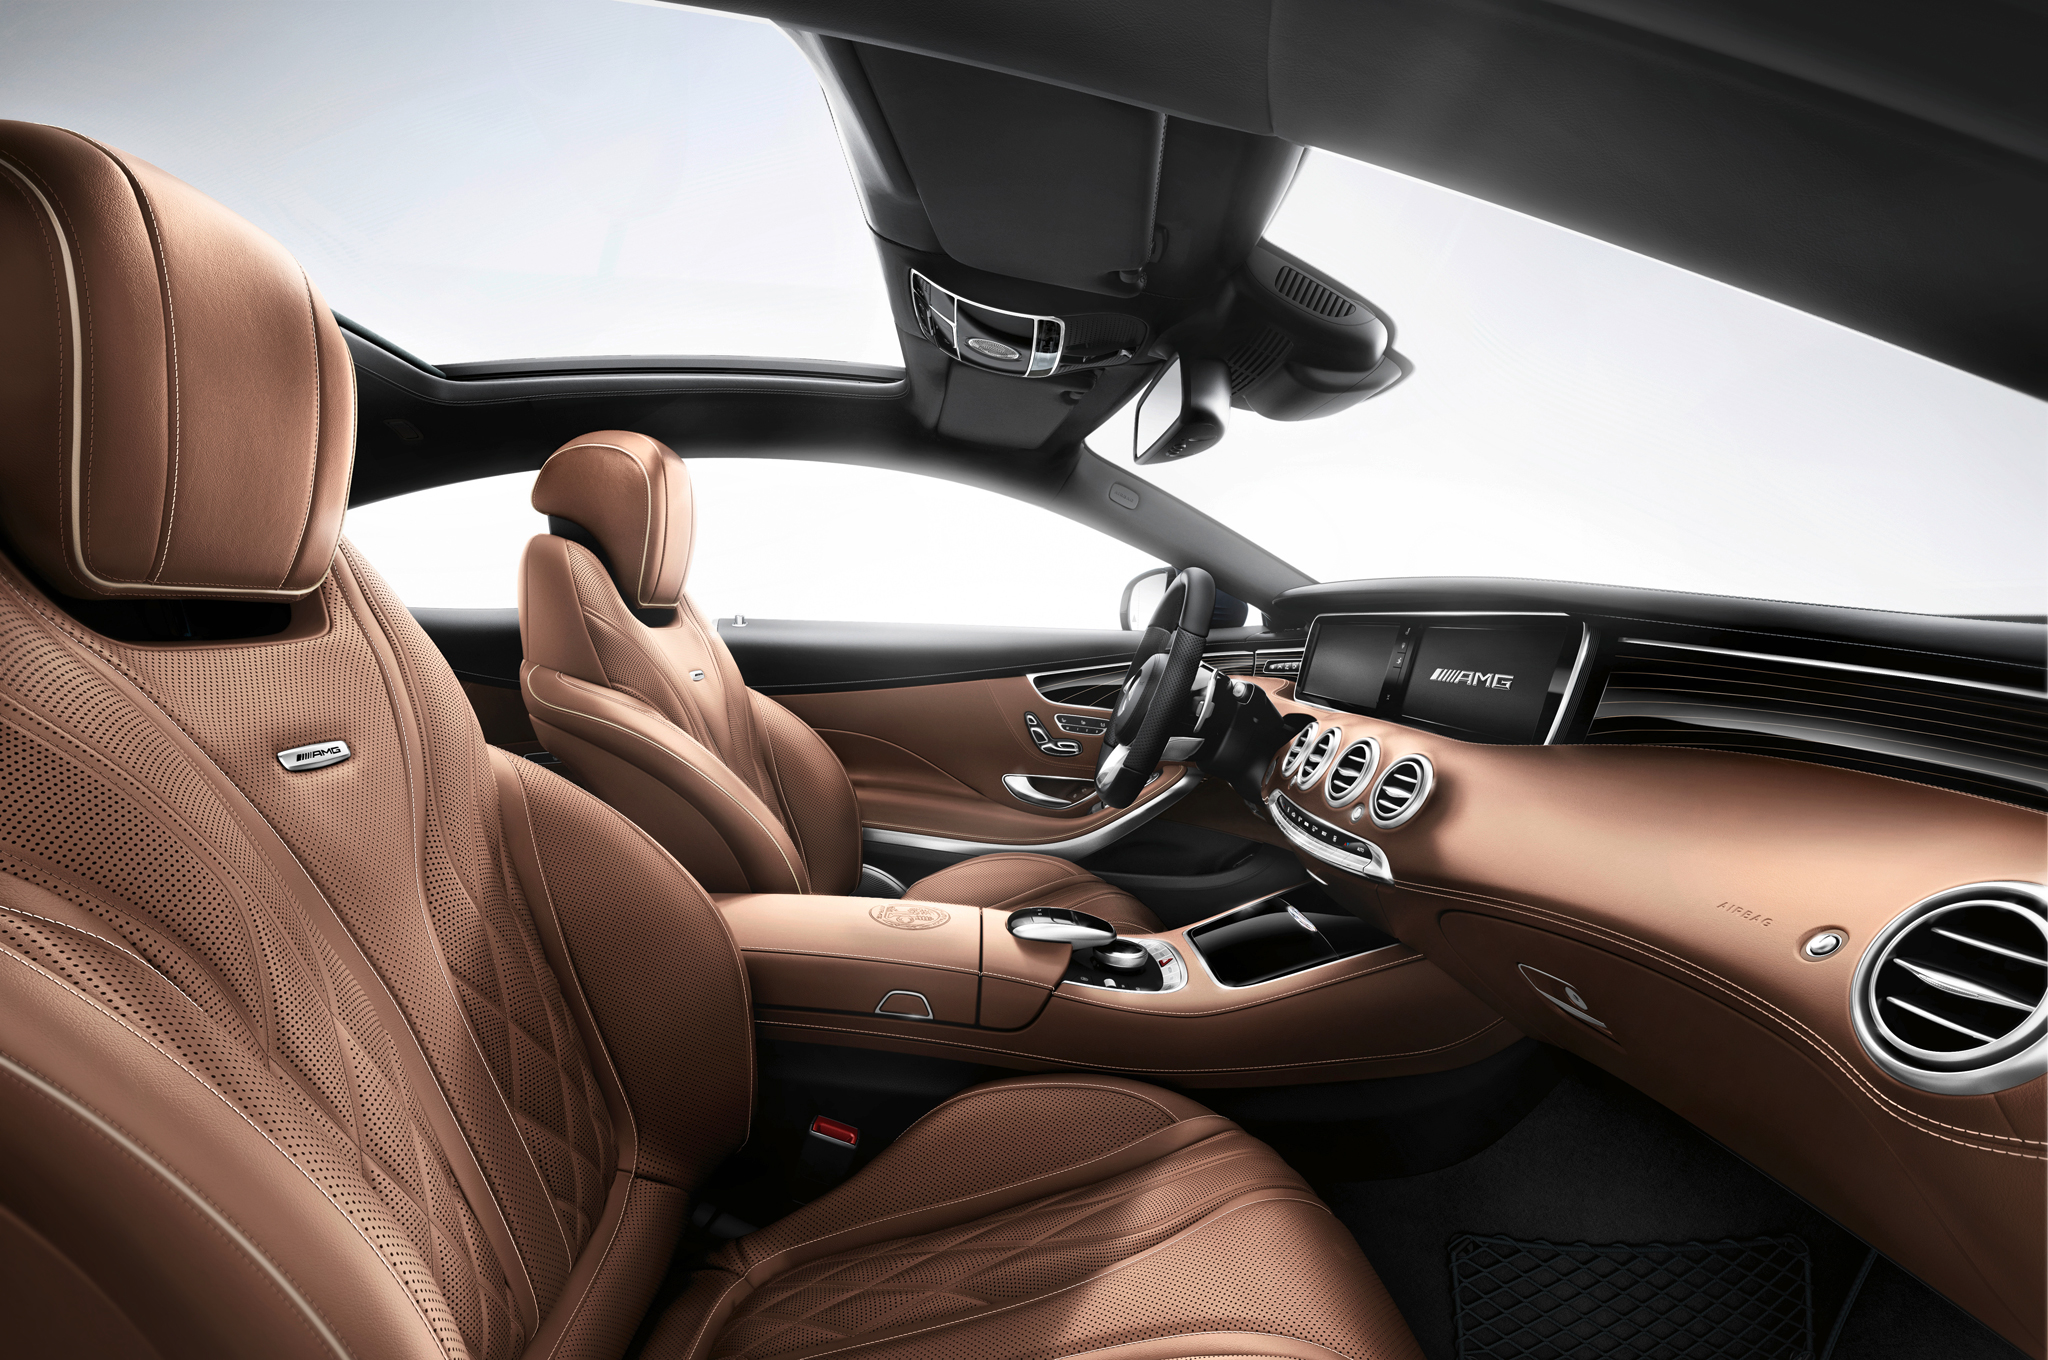 2015 Mercedes Benz S65 Amg Coupe Interior 02 Mercedes Benz